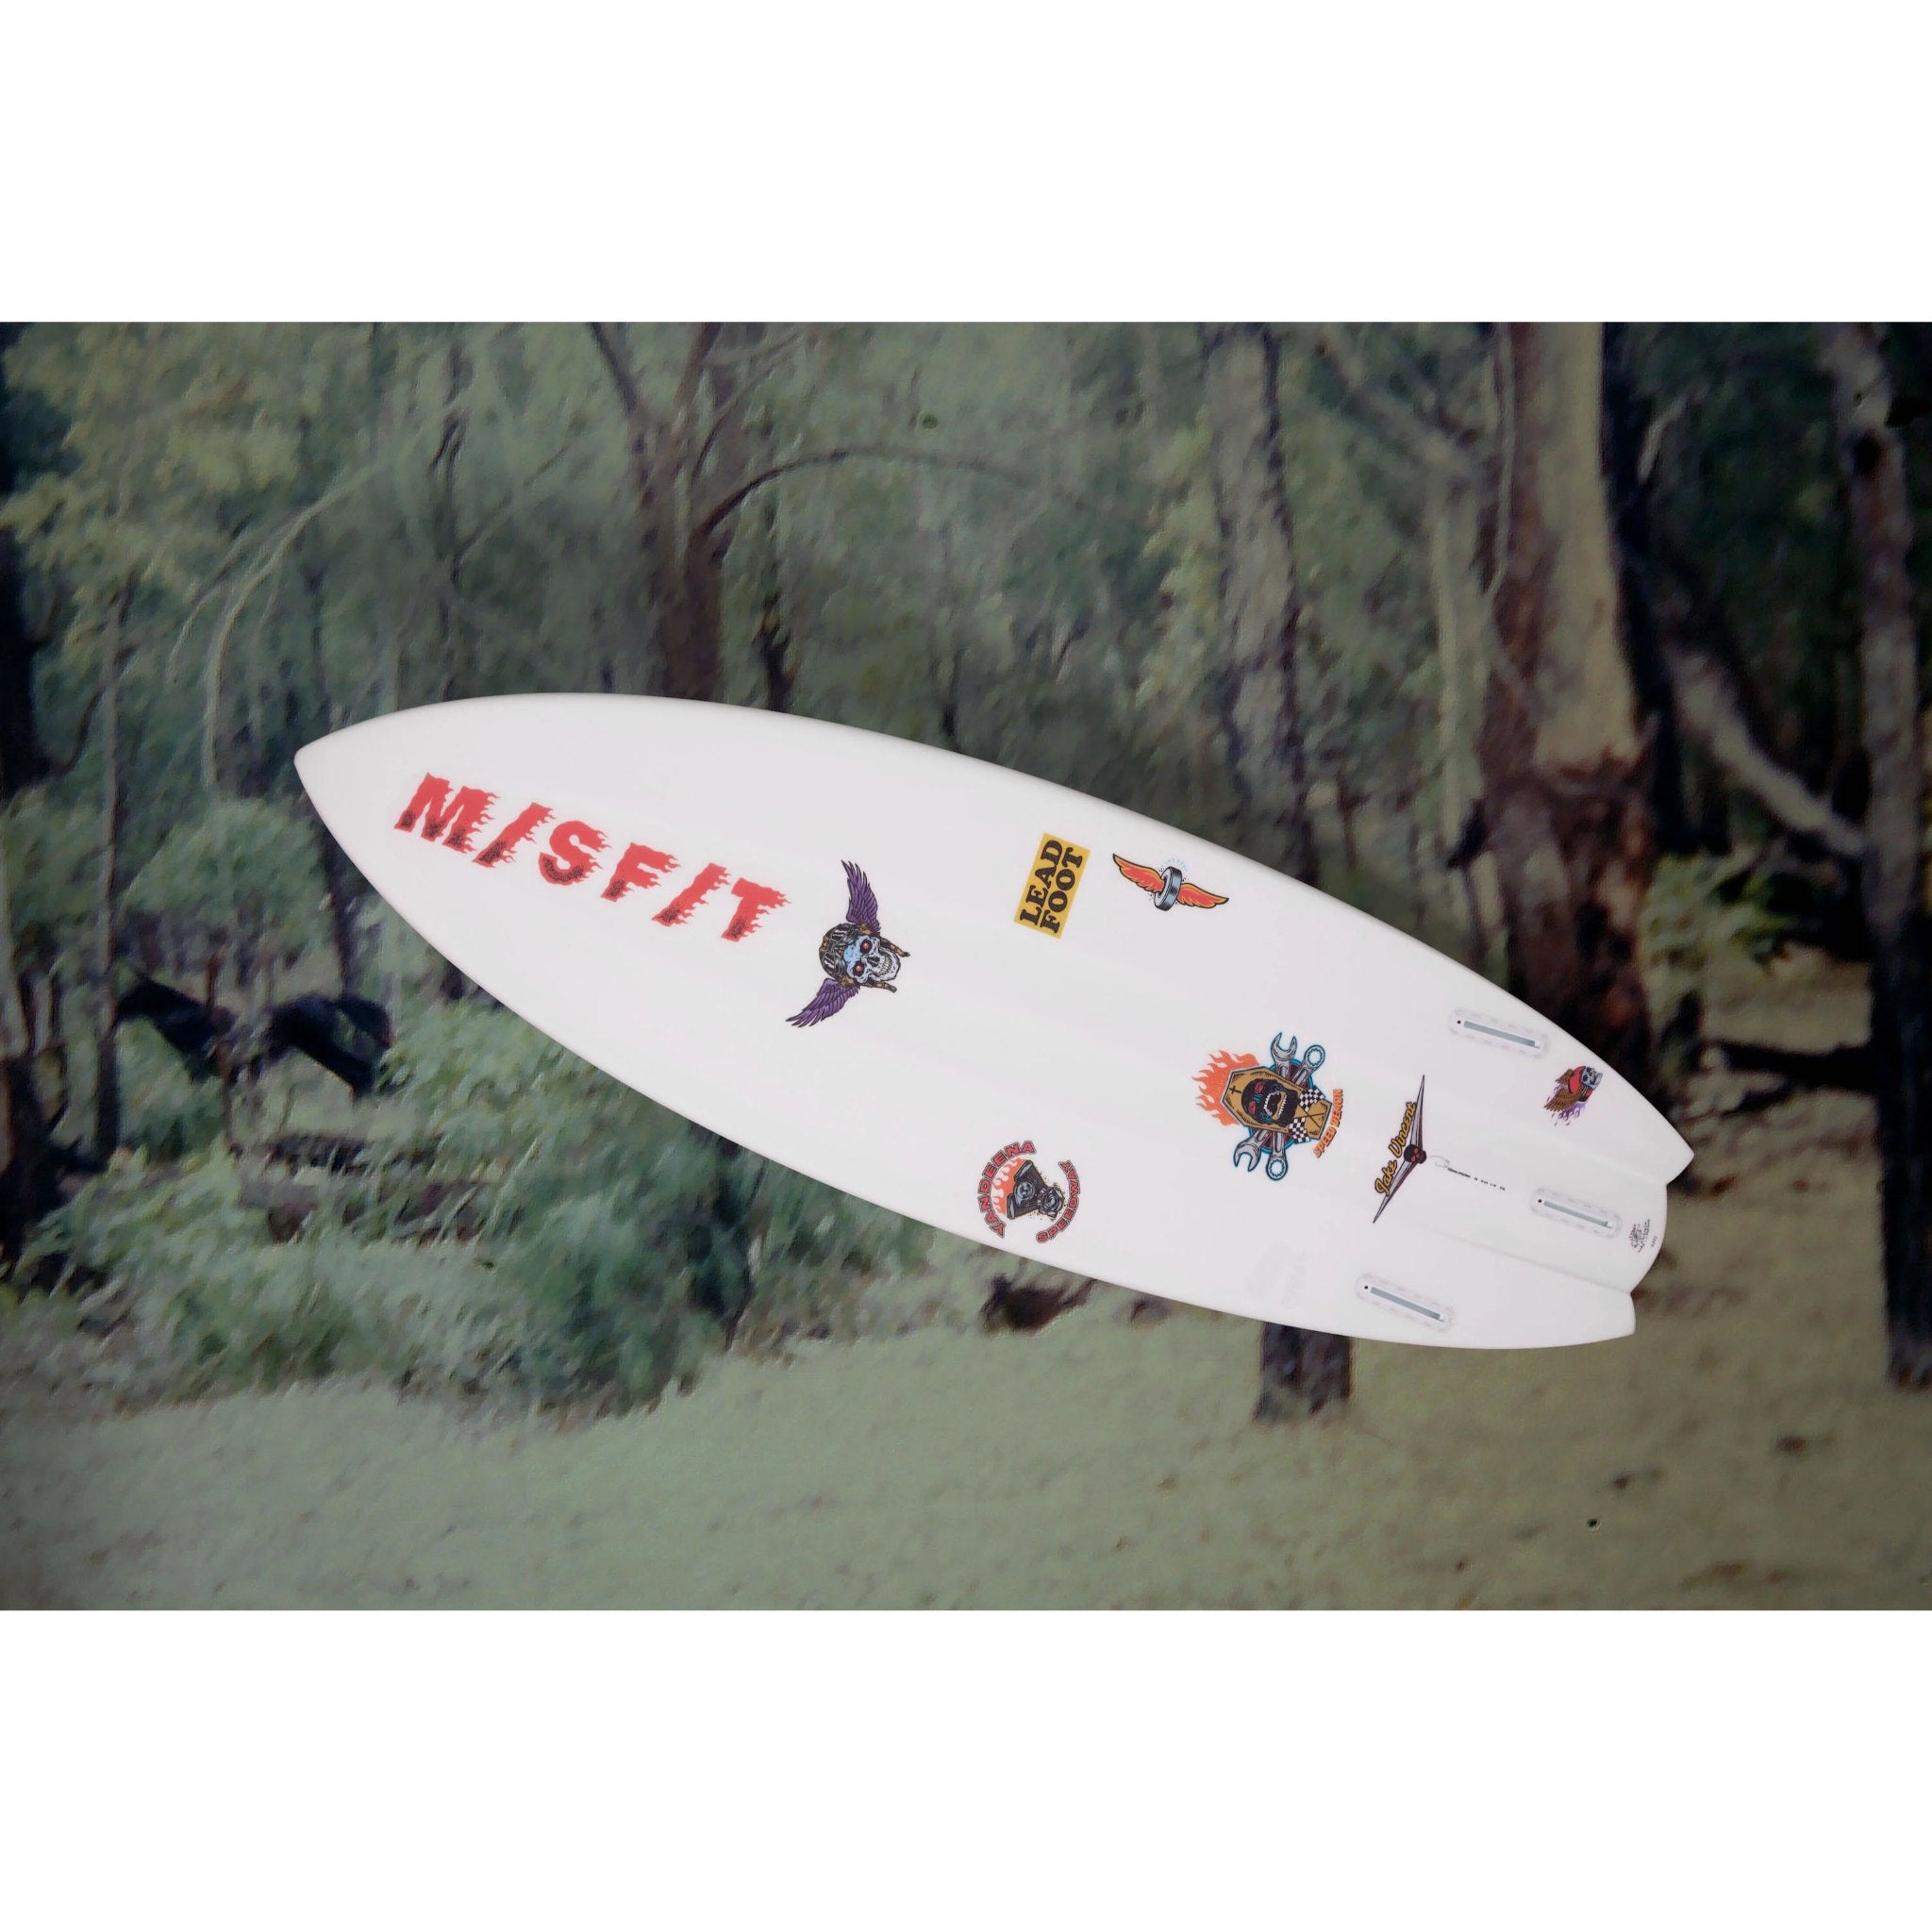 Misfit Primitek Yadina Speedway Surfboard - Futures ART 5-6